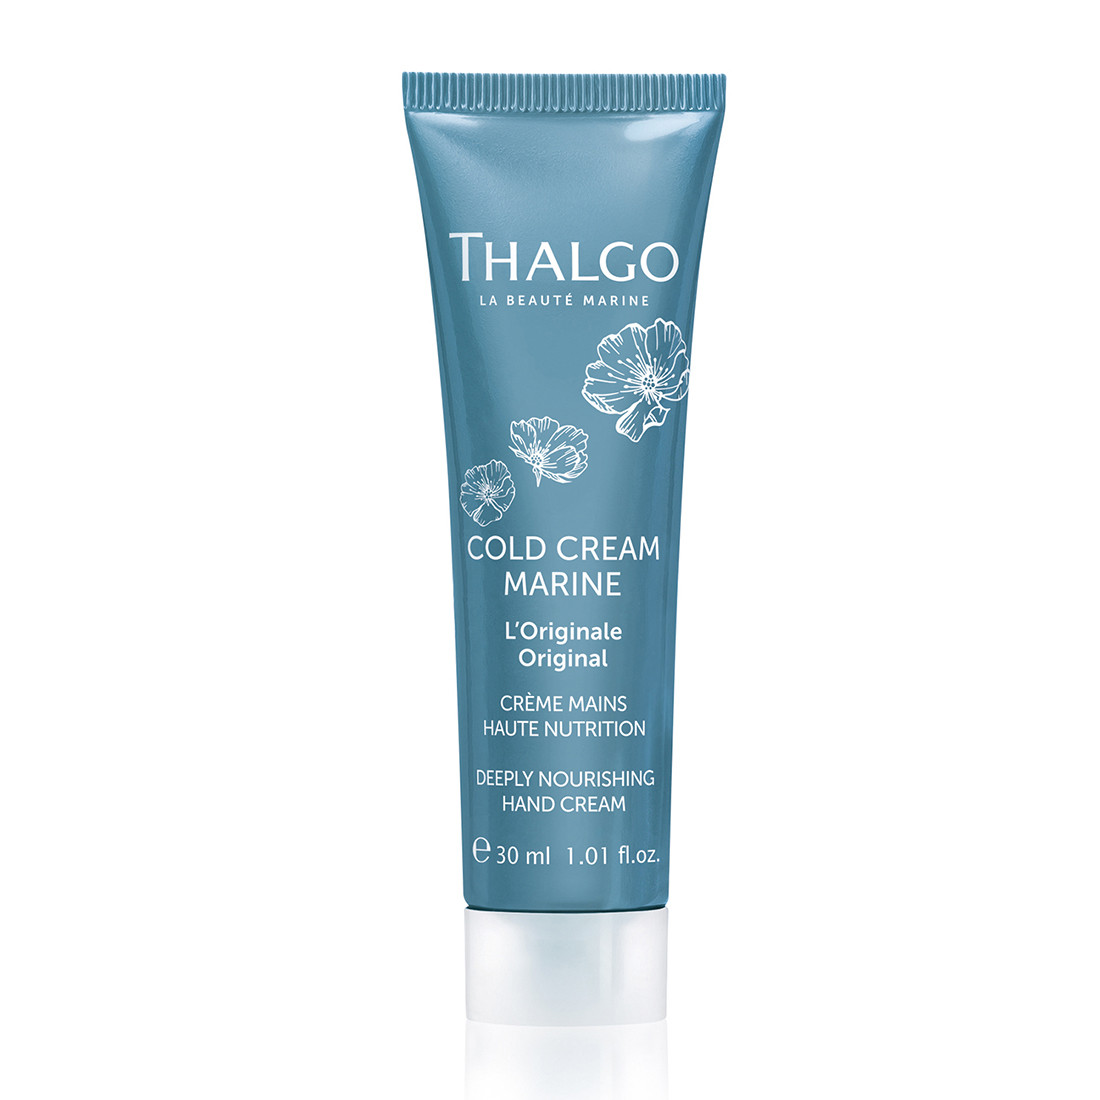 Thalgo Cold Cream Marine Deeply Nourishing Hand Cream Інтенсивний живильний крем для рук